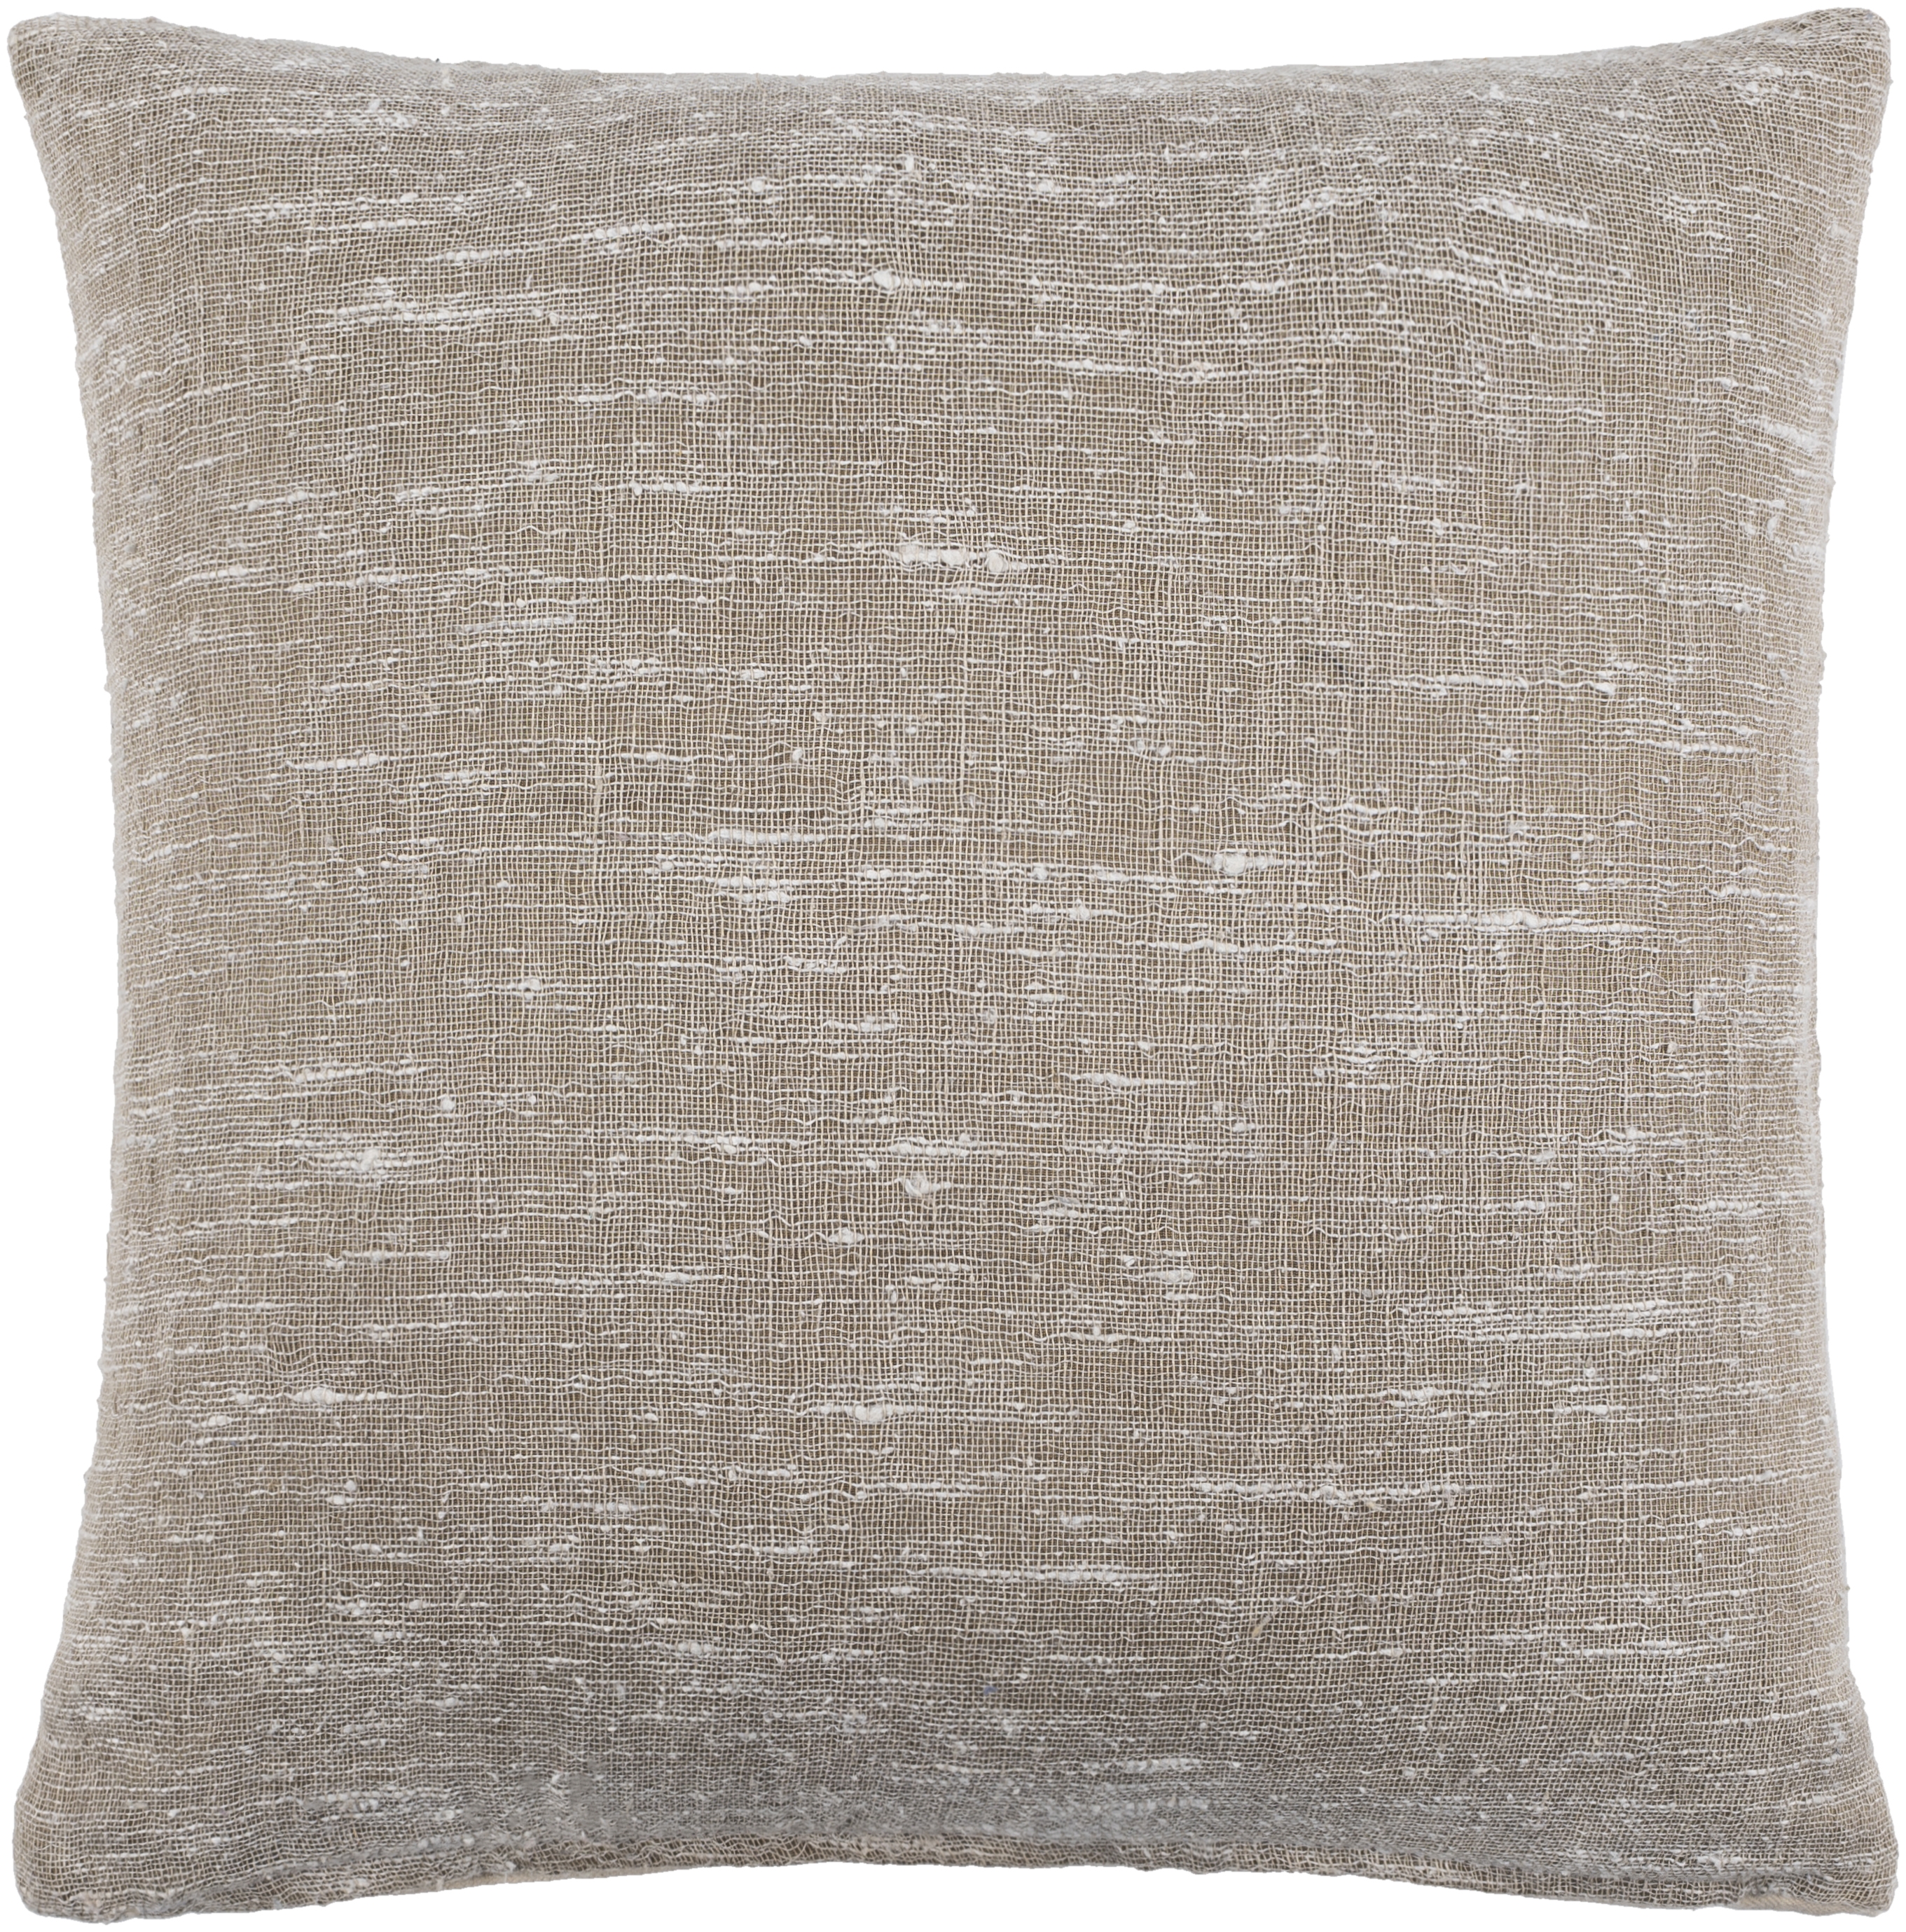 Romona Throw Pillow, Medium, pillow cover only - Image 0